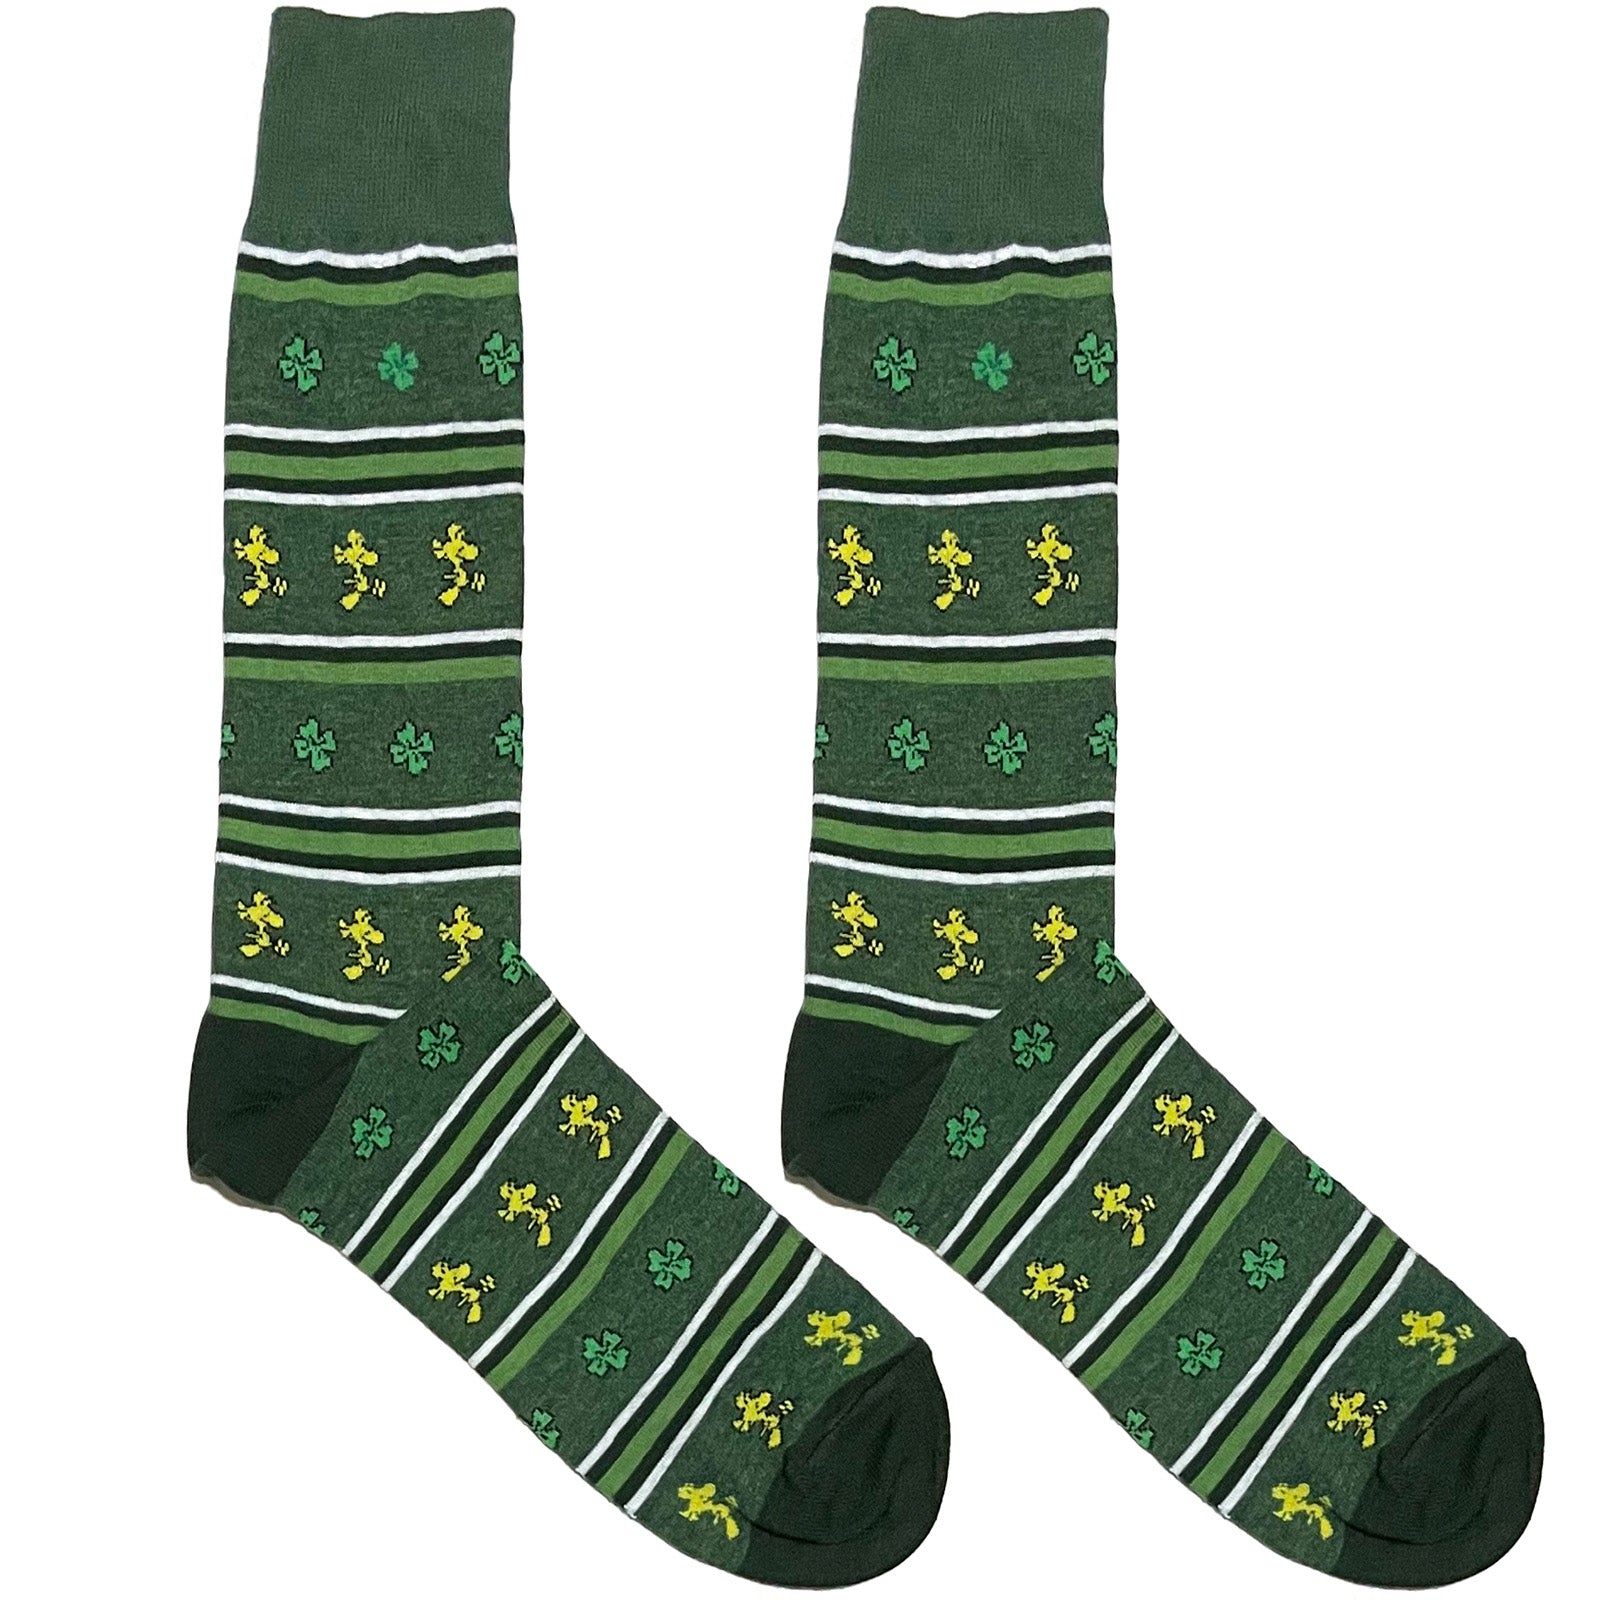 Green And Yellow Leaf Socks